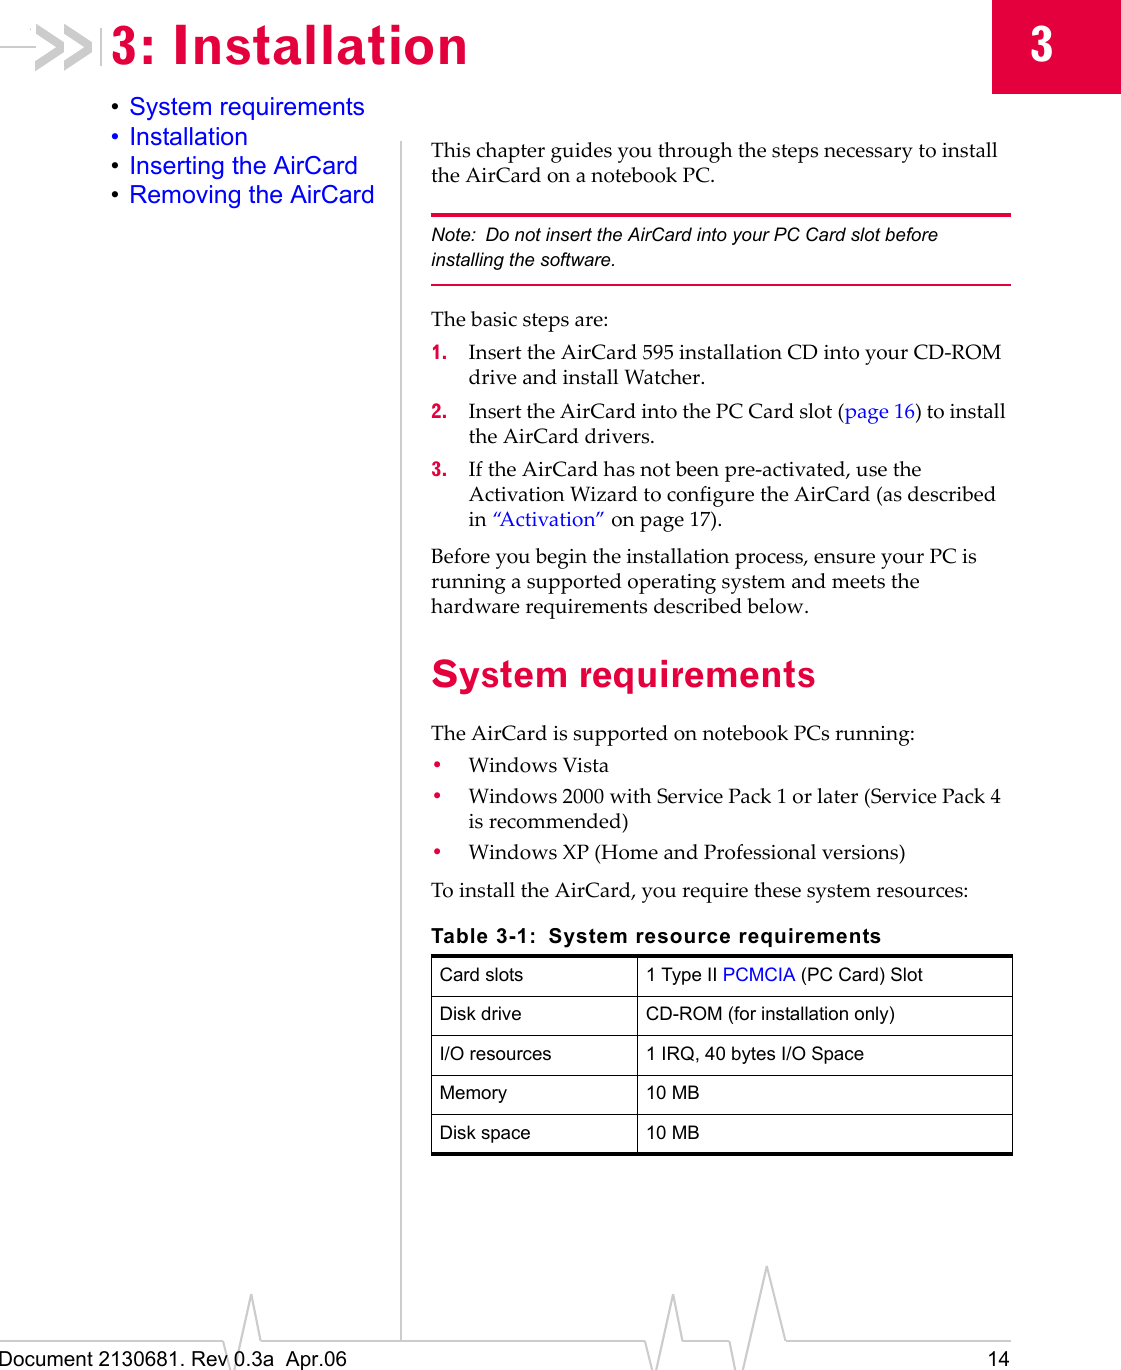 Document 2130681. Rev 0.3a  Apr.06 1433: Installation•System requirements•Installation•Inserting the AirCard•Removing the AirCardThisȱchapterȱguidesȱyouȱthroughȱtheȱstepsȱnecessaryȱtoȱinstallȱtheȱAirCardȱonȱaȱnotebookȱPC.Note: Do not insert the AirCard into your PC Card slot before installing the software.Theȱbasicȱstepsȱare:1. InsertȱtheȱAirCard 595ȱinstallationȱCDȱintoȱyourȱCDȬROMȱdriveȱandȱinstallȱWatcher.2. InsertȱtheȱAirCardȱintoȱtheȱPC Cardȱslot (page 16)ȱtoȱinstallȱtheȱAirCardȱdrivers.3. IfȱtheȱAirCardȱhasȱnotȱbeenȱpreȬactivated,ȱuseȱtheȱActivationȱWizardȱtoȱconfigureȱtheȱAirCardȱ(asȱdescribedȱinȱ“Activation”ȱonȱpage 17).Beforeȱyouȱbeginȱtheȱinstallationȱprocess,ȱensureȱyourȱPCȱisȱrunningȱaȱsupportedȱoperatingȱsystemȱandȱmeetsȱtheȱhardwareȱrequirementsȱdescribedȱbelow.System requirementsTheȱAirCardȱisȱsupportedȱonȱnotebookȱPCsȱrunning:•WindowsȱVista•Windowsȱ2000ȱwithȱServiceȱPackȱ1ȱorȱlaterȱ(ServiceȱPackȱ4ȱisȱrecommended)•Windows XPȱ(HomeȱandȱProfessionalȱversions)ToȱinstallȱtheȱAirCard,ȱyouȱrequireȱtheseȱsystemȱresources:Table 3-1: System resource requirementsCard slots 1 Type II PCMCIA (PC Card) SlotDisk drive CD-ROM (for installation only)I/O resources 1 IRQ, 40 bytes I/O SpaceMemory 10 MBDisk space 10 MB